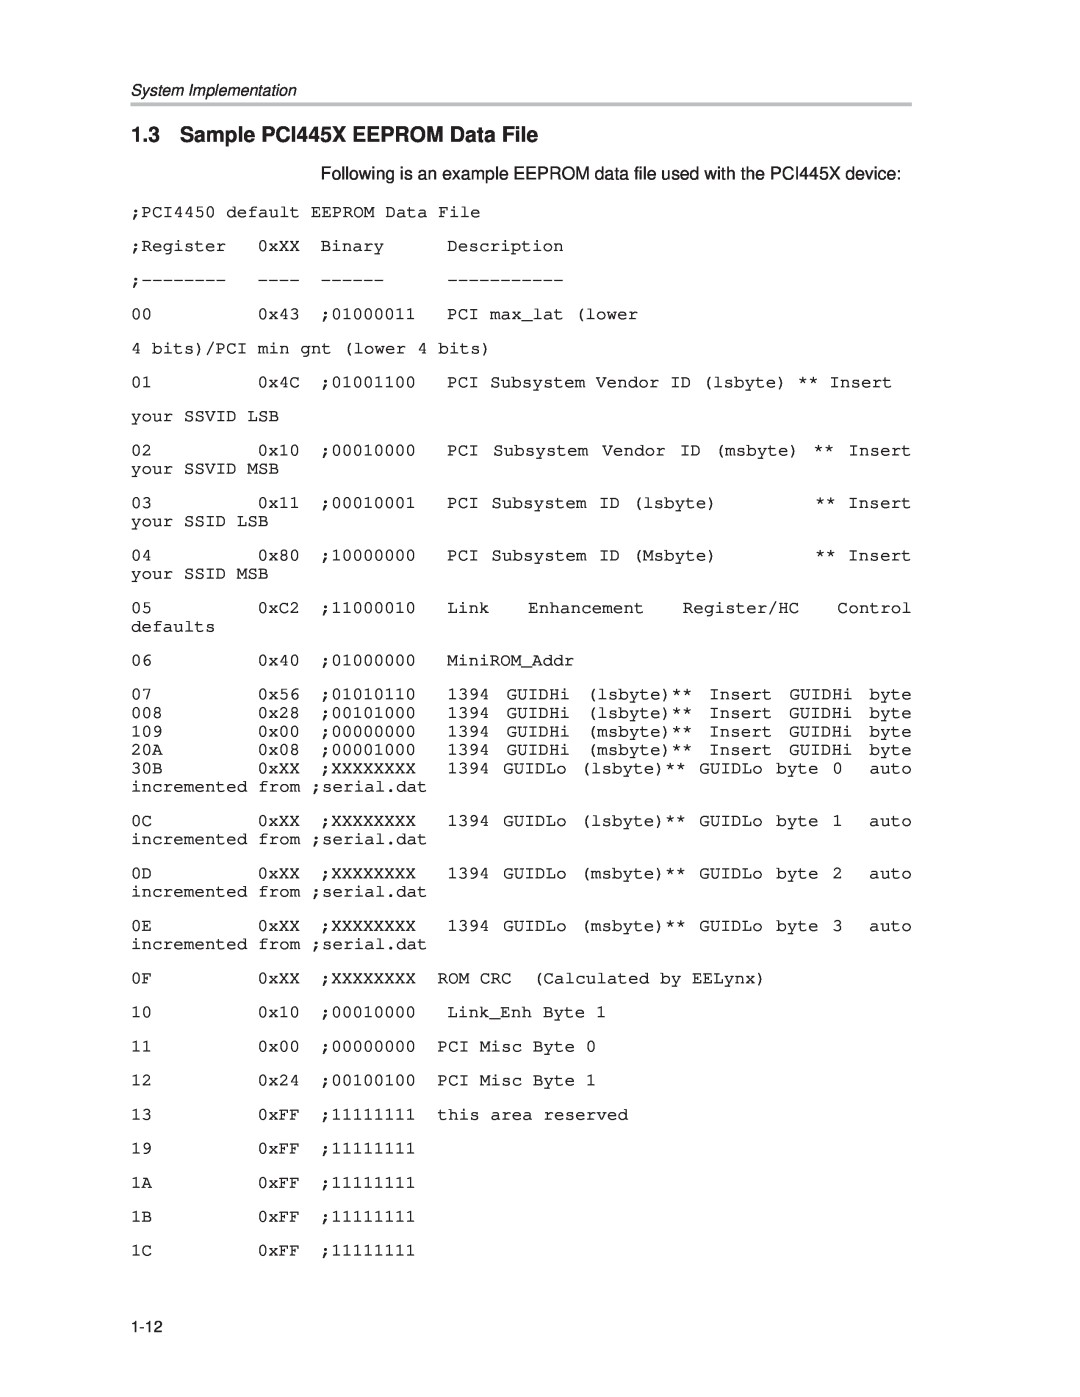 Texas Instruments manual Sample PCI445X EEPROM Data File 